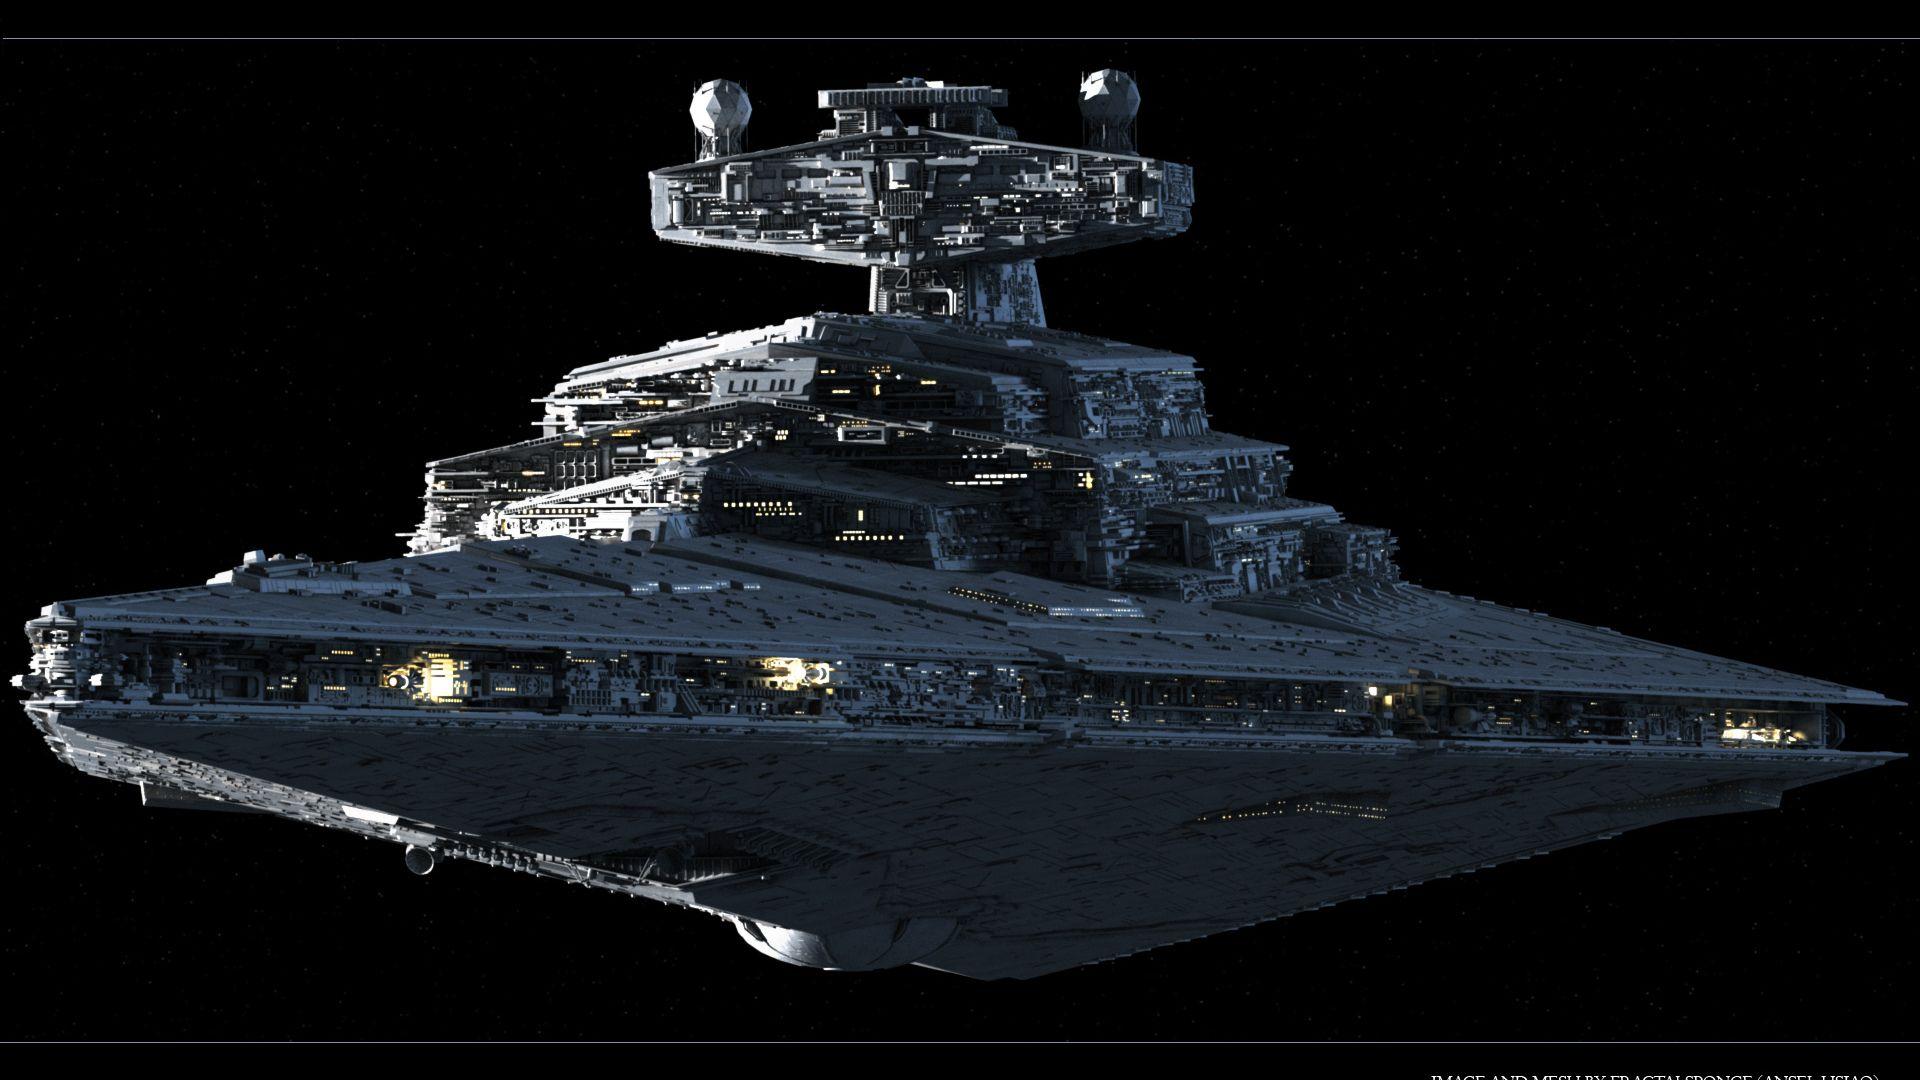 Star Wars HD Wallpaper 1080p: Spaceship Full High Definition Star